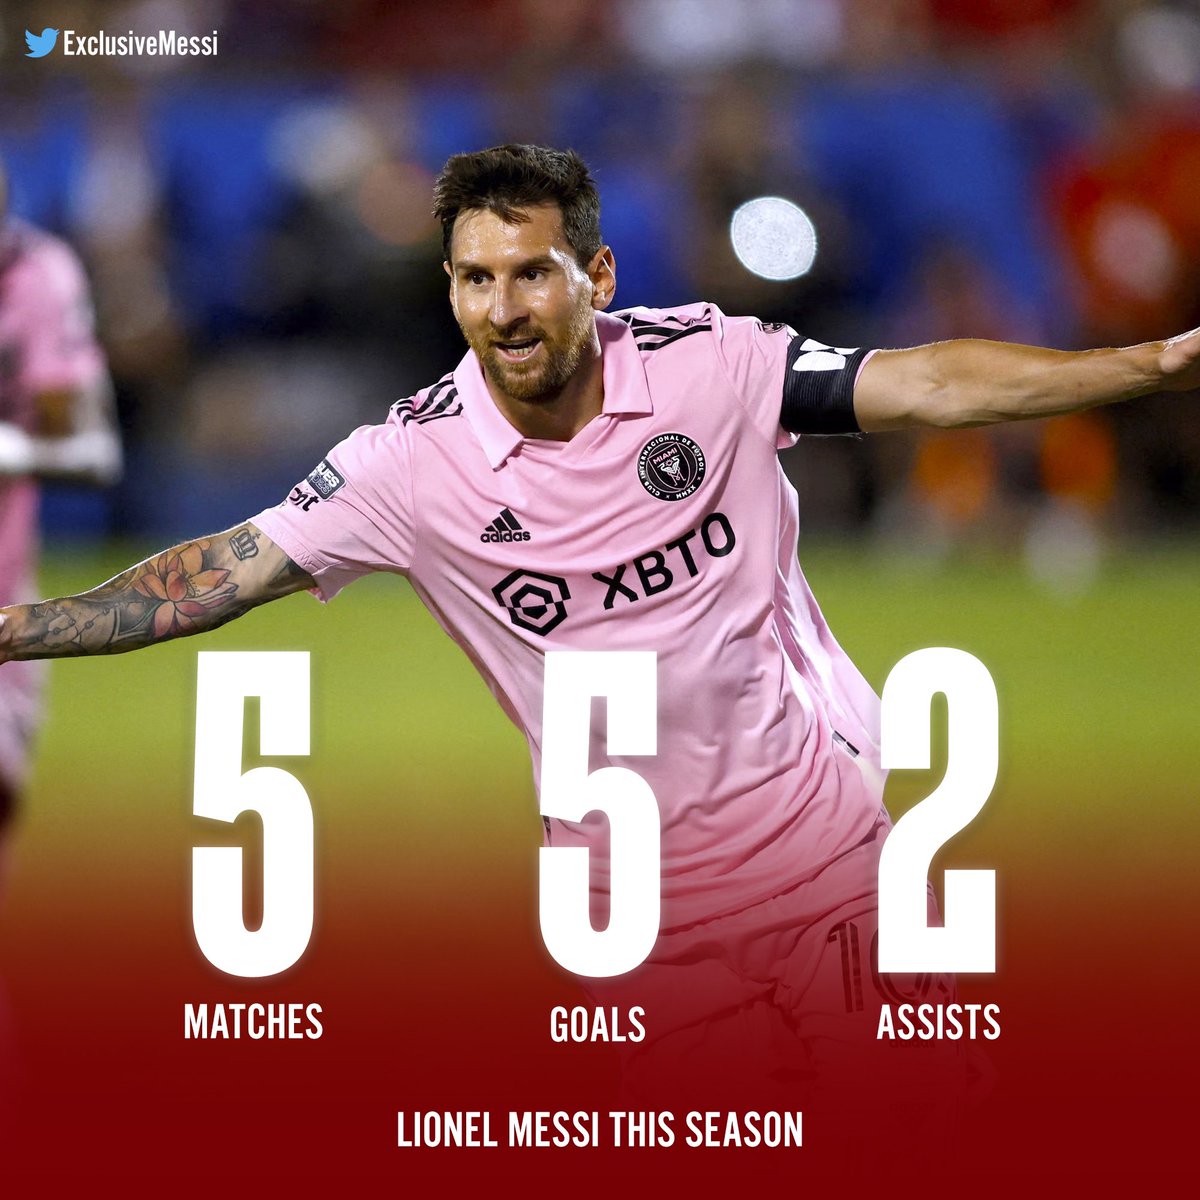 🚨 Lionel Messi this season: 🏟️ 5 Matches ⚽️ 5 Goals 🅰️ 2 Assists